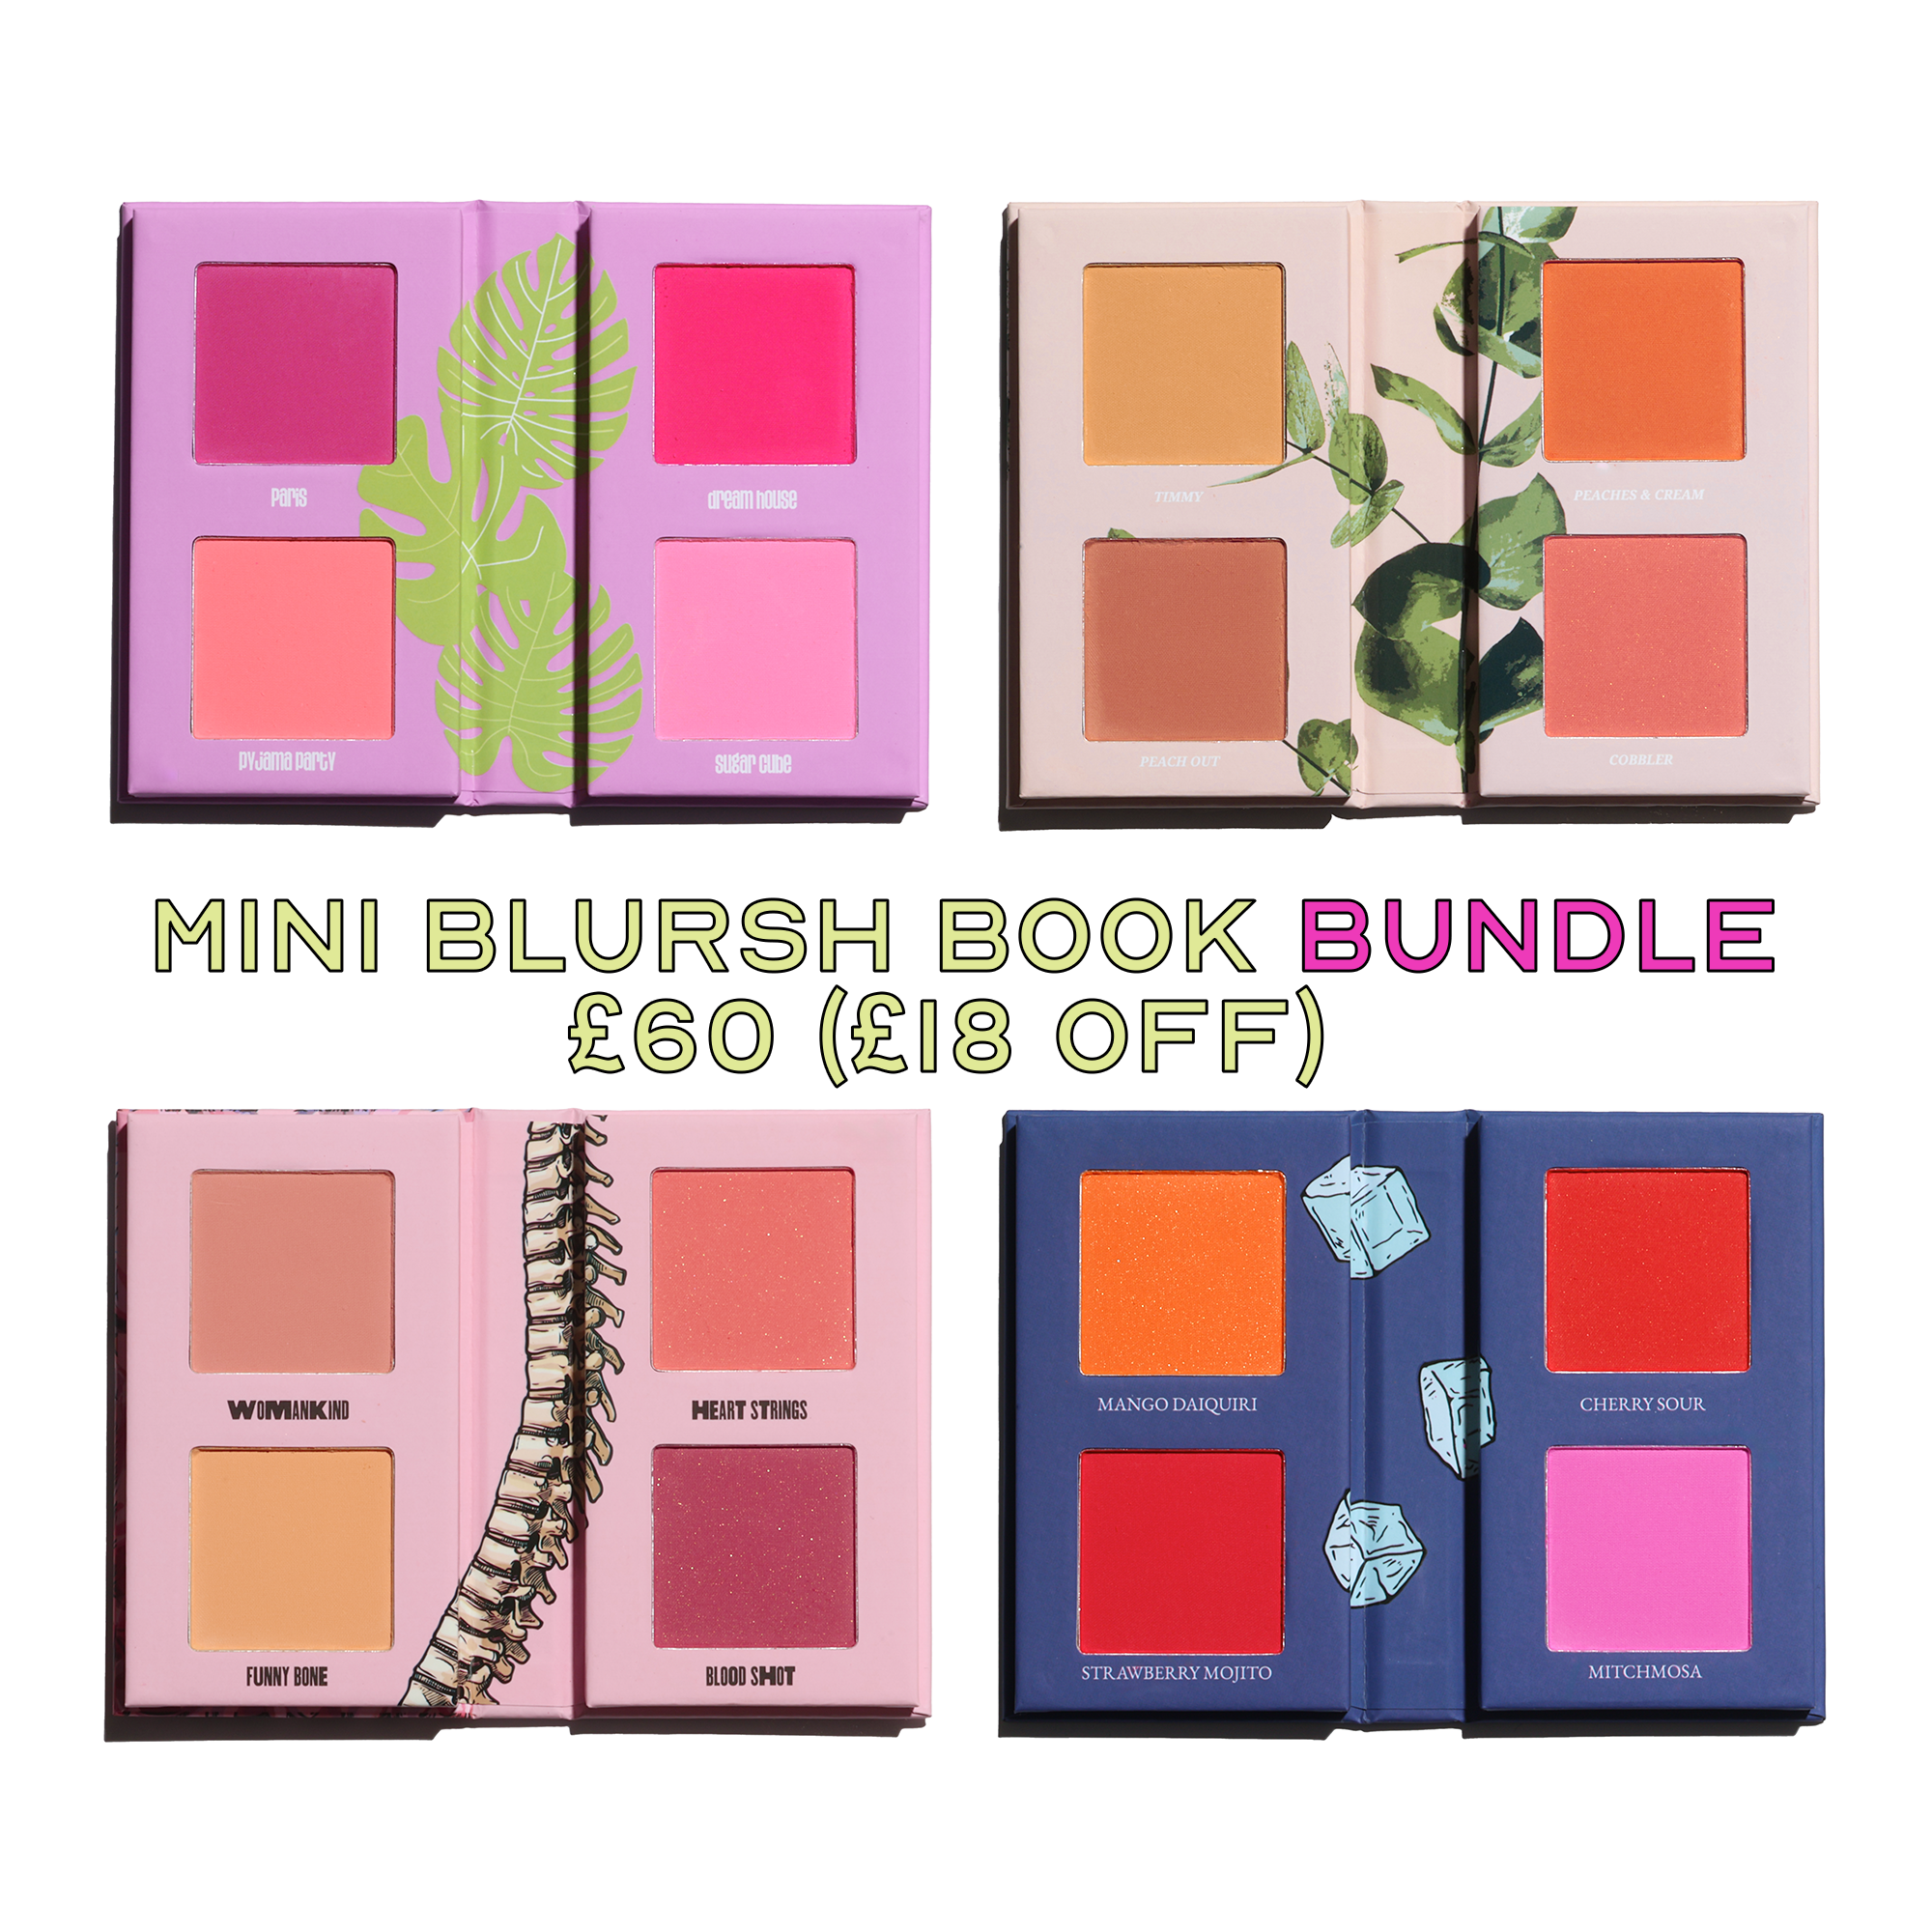 Mini Blursh Book Bundle